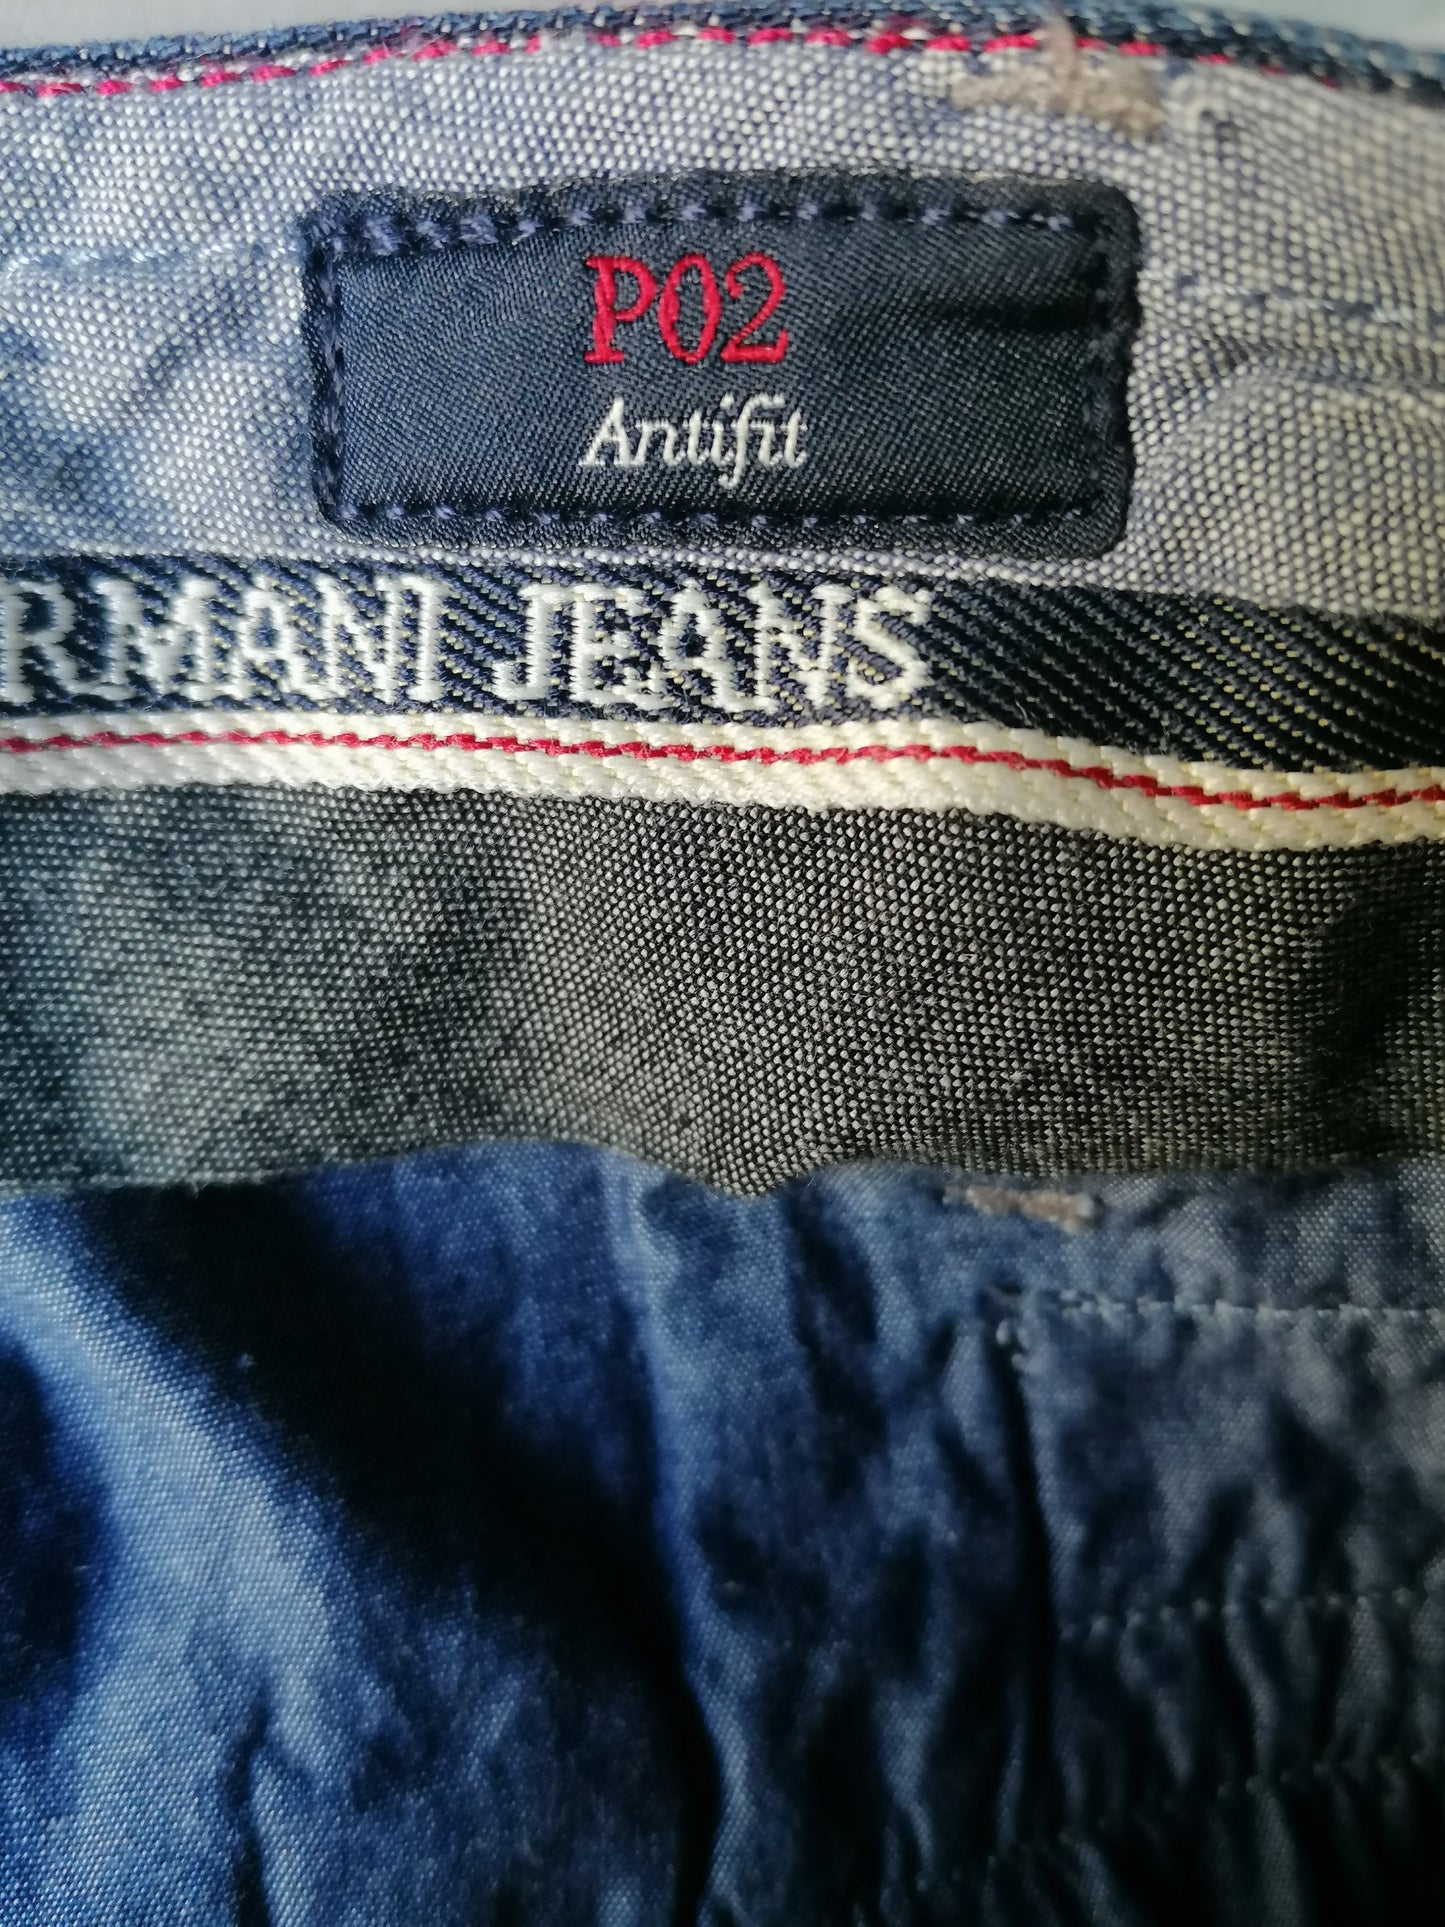 Armani Jeans broek. Jeans stof. Donker Blauw gekleurd. Maat 58 / XL. type PO2 Anti Fit.